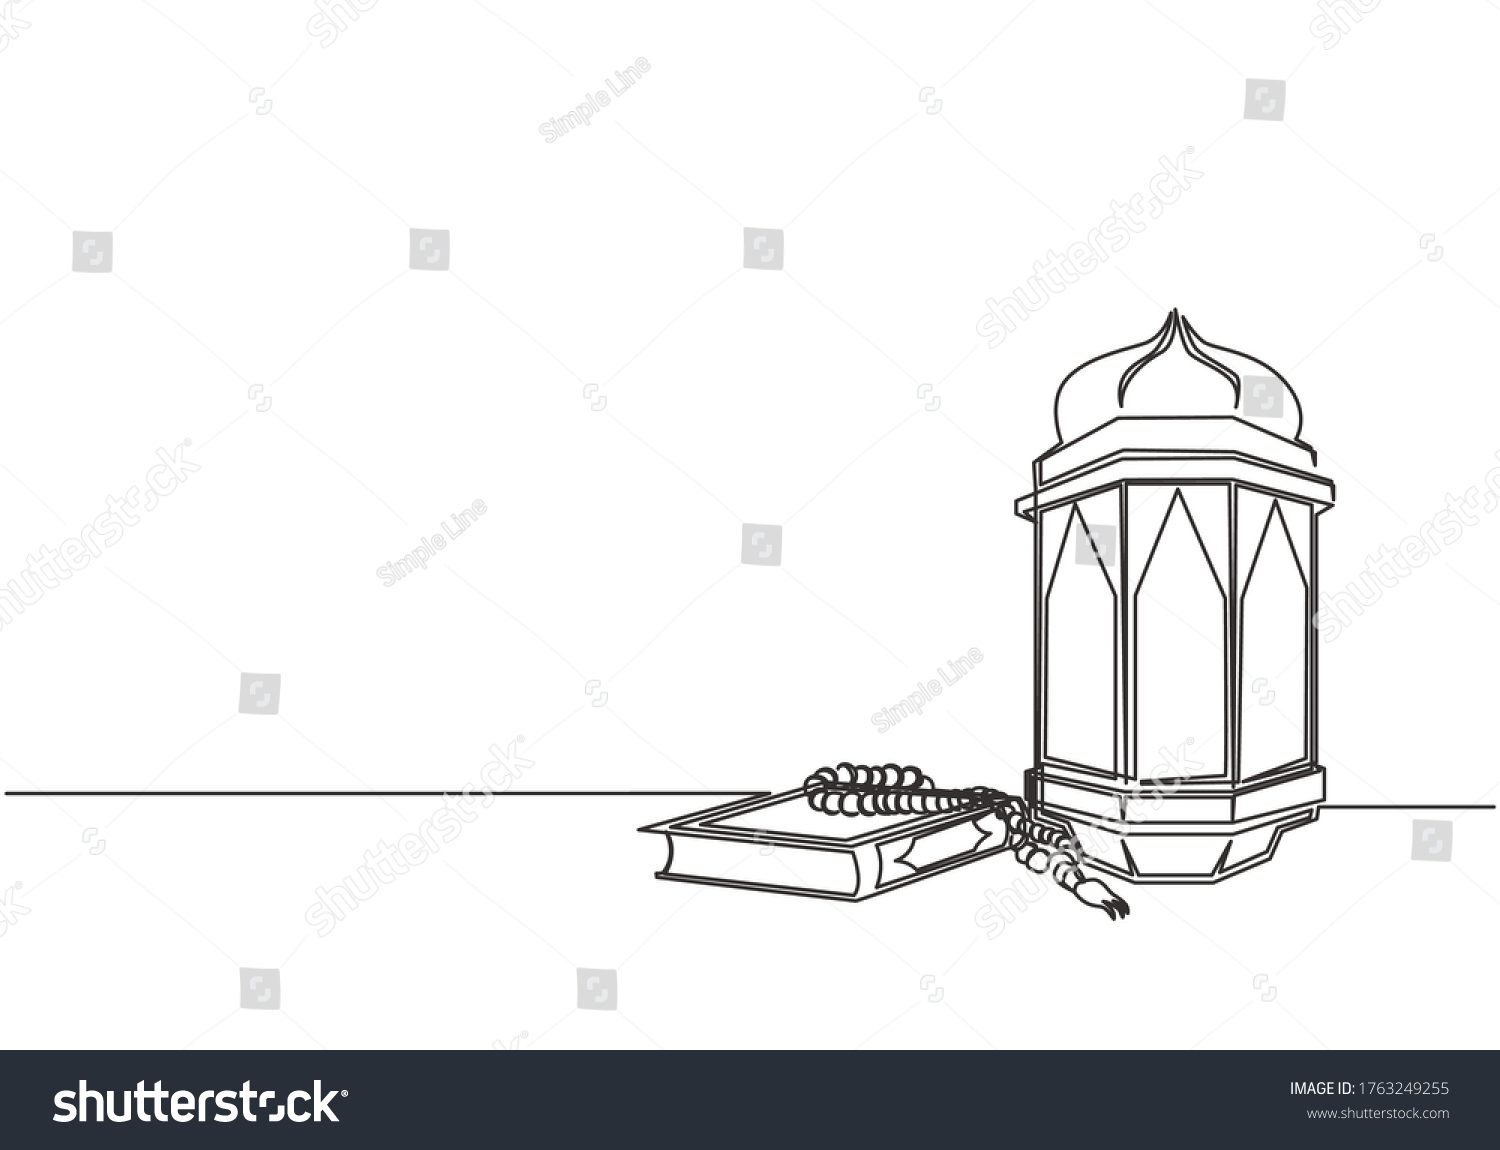 SVG of Ramadan Kareem greeting card, poster and banner design. Single continuous line drawing of Islamic ornament quran kitab, tasbih and lantern lamp. Muslim festival one line draw vector illustration svg